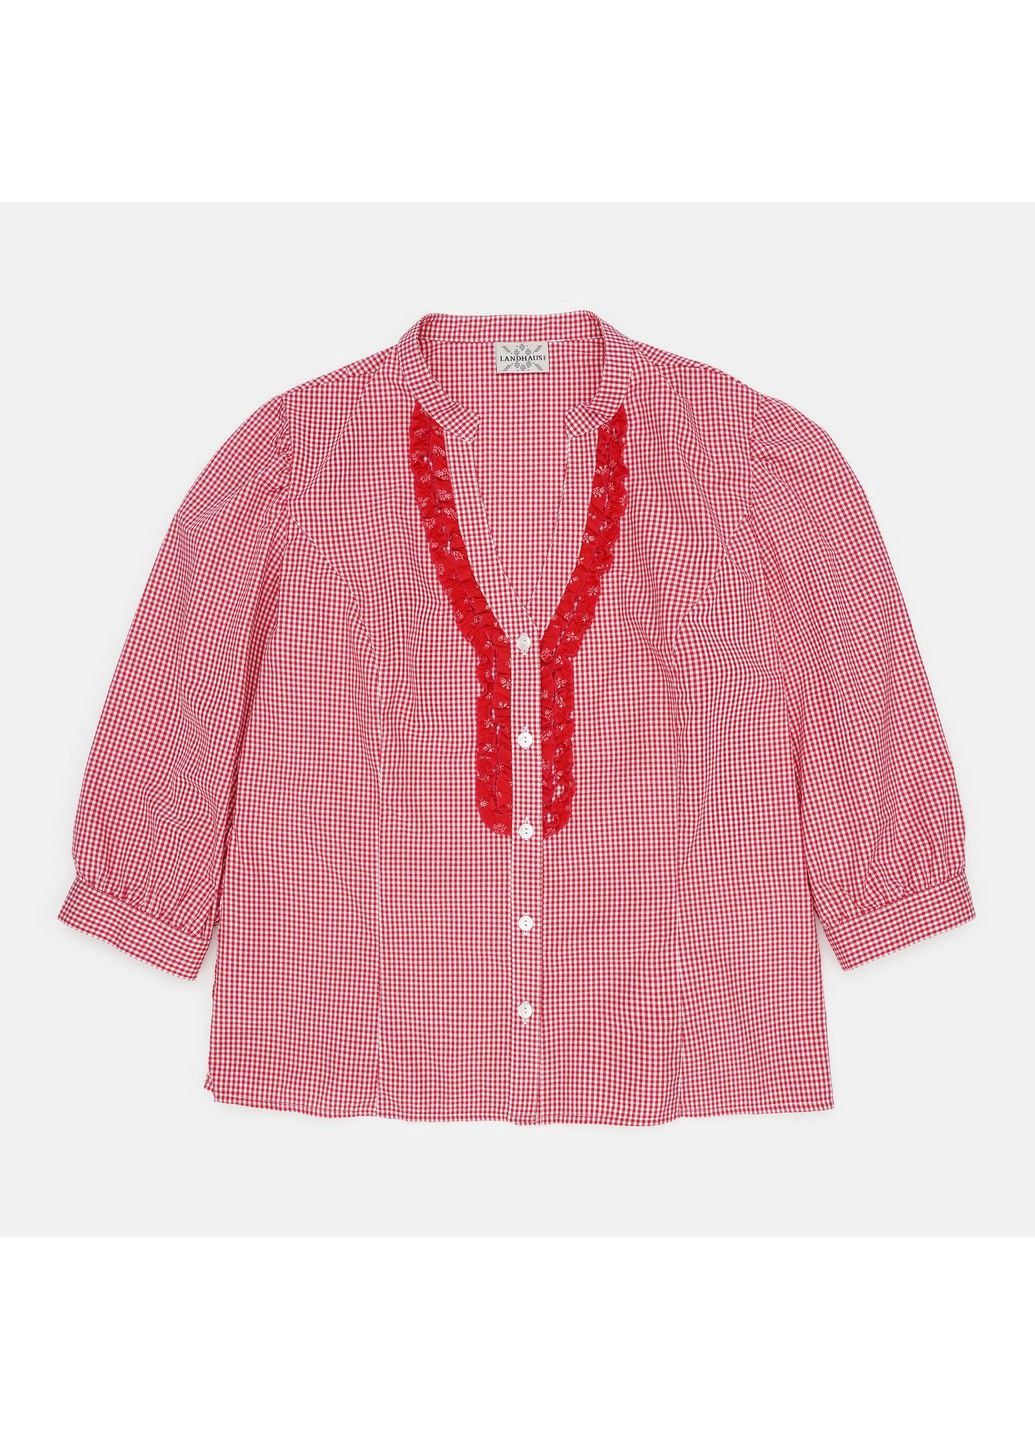 Червона демісезонна блуза C&A